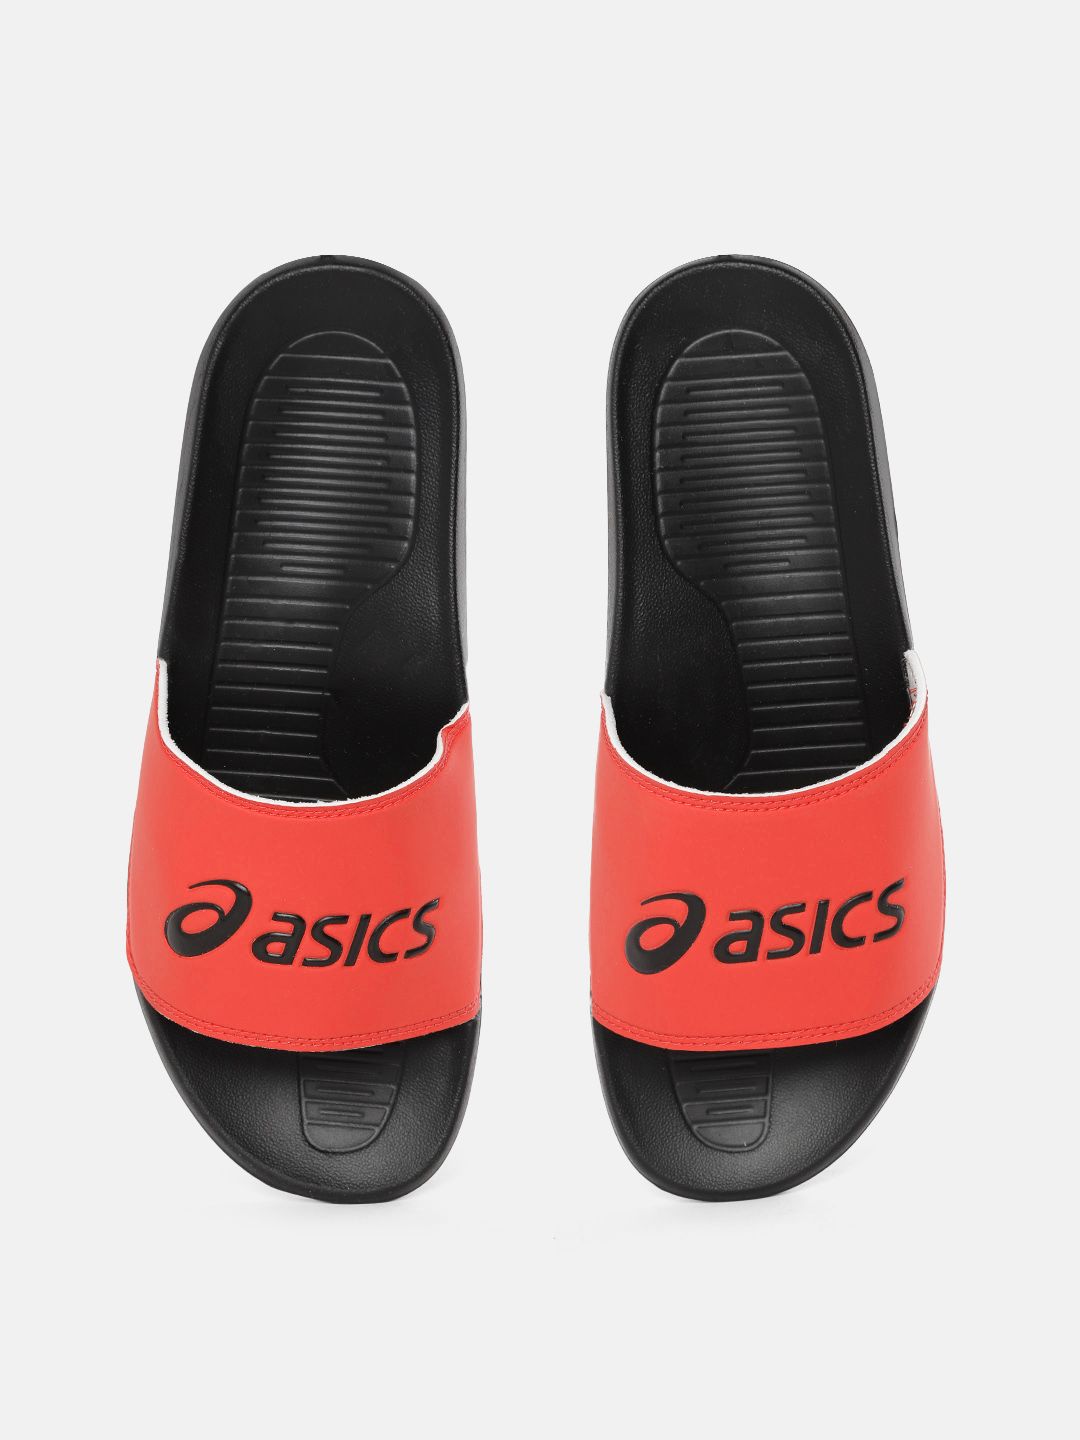 ASICS Unisex Coral Orange & Black Brand Logo Print Sliders Price in India